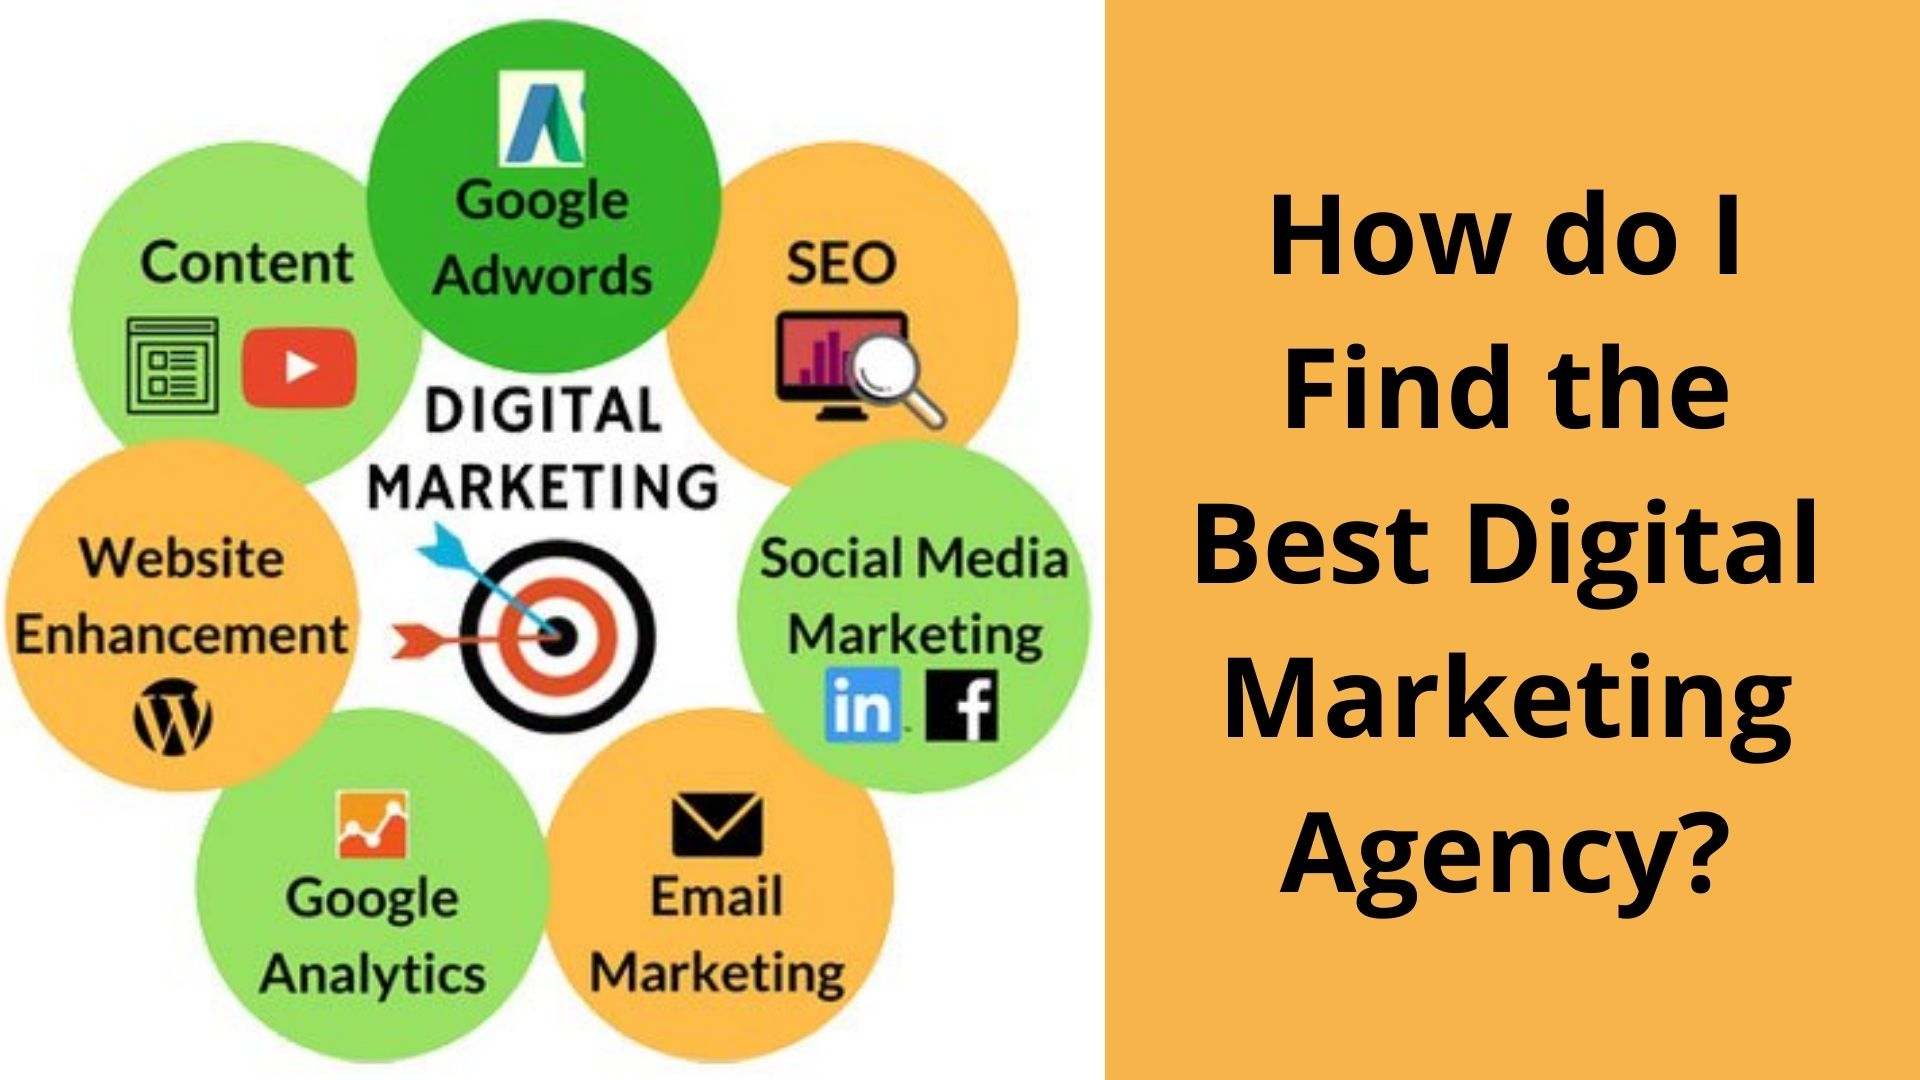 public/uploads/2022/03/How-do-I-Find-the-Best-Digital-Marketing-Agency.jpg